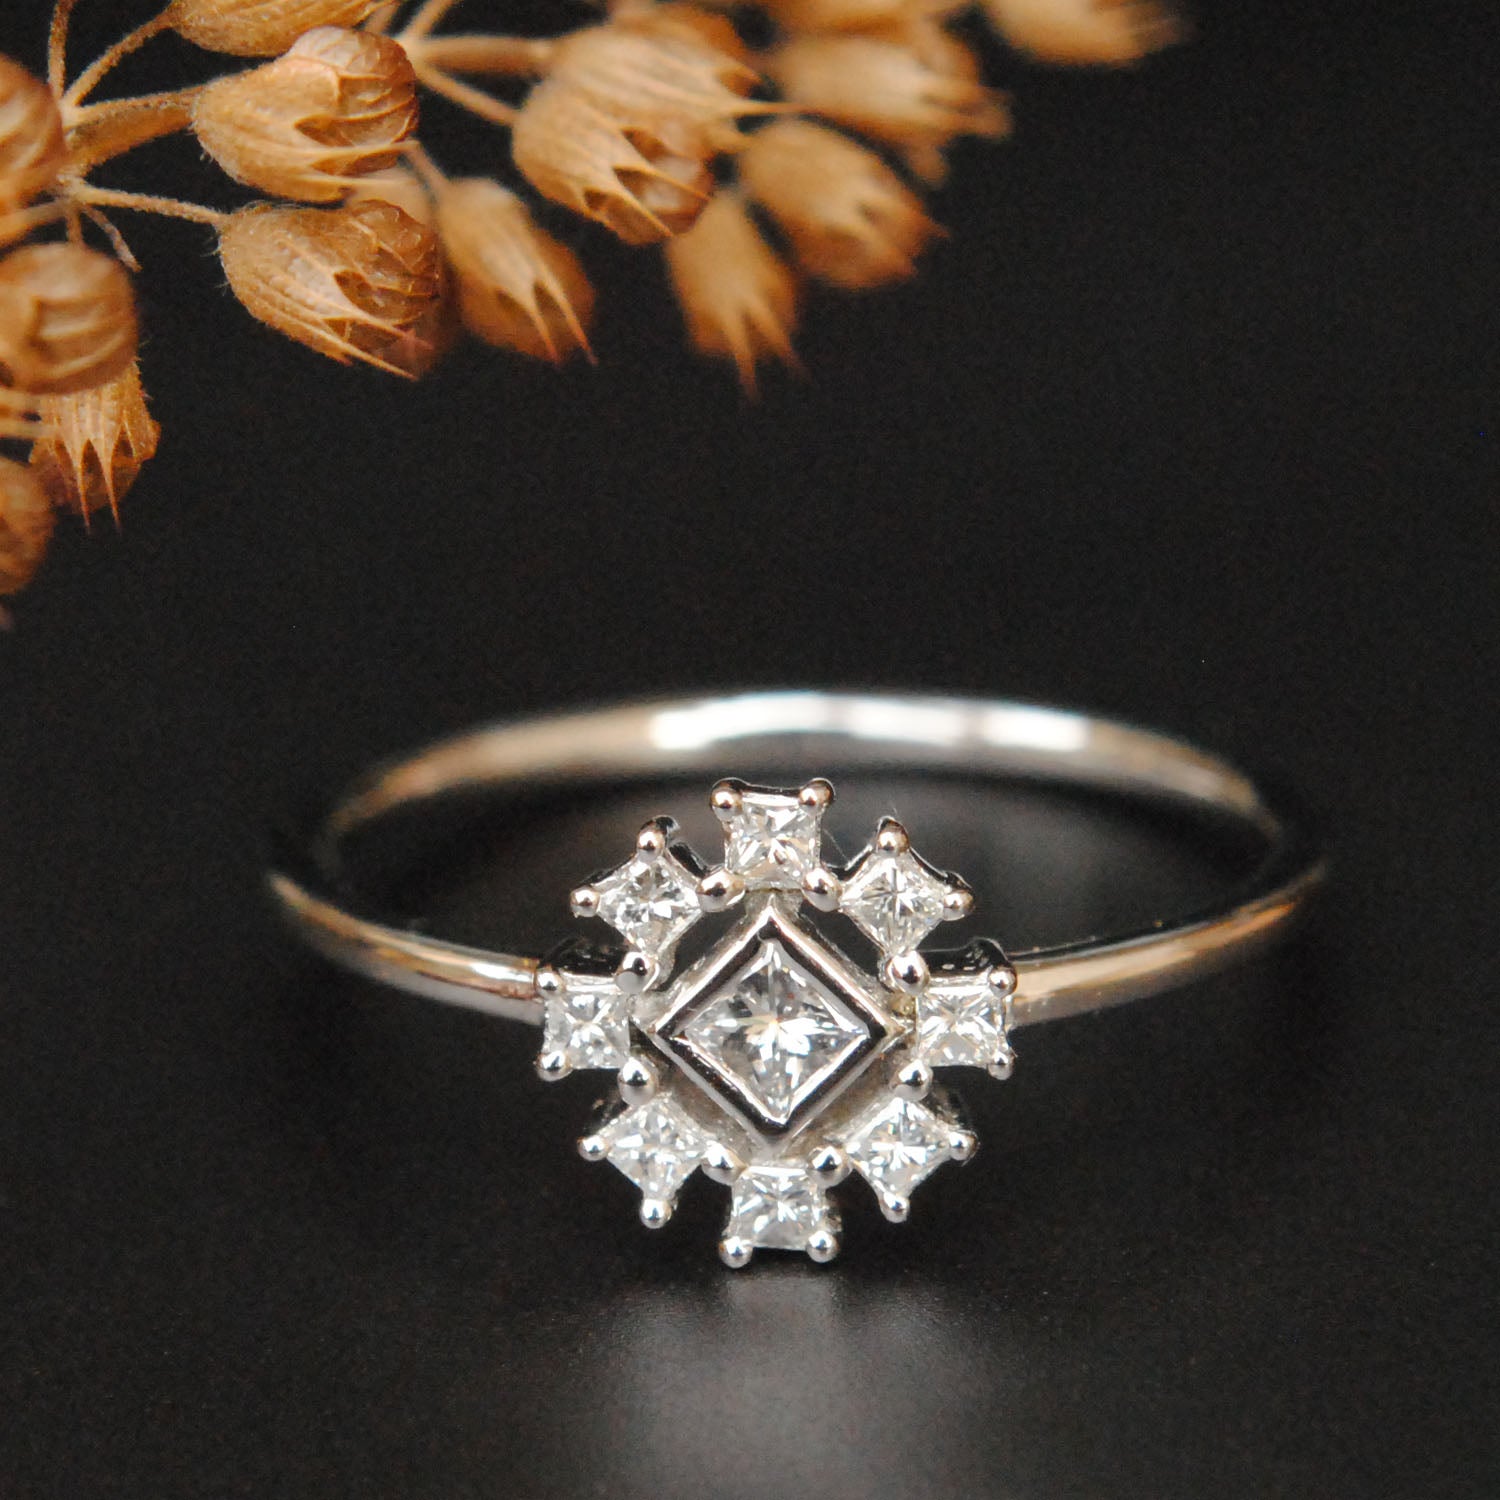 Art Deco Princess Cut Diamond Engagement Ring with Halo